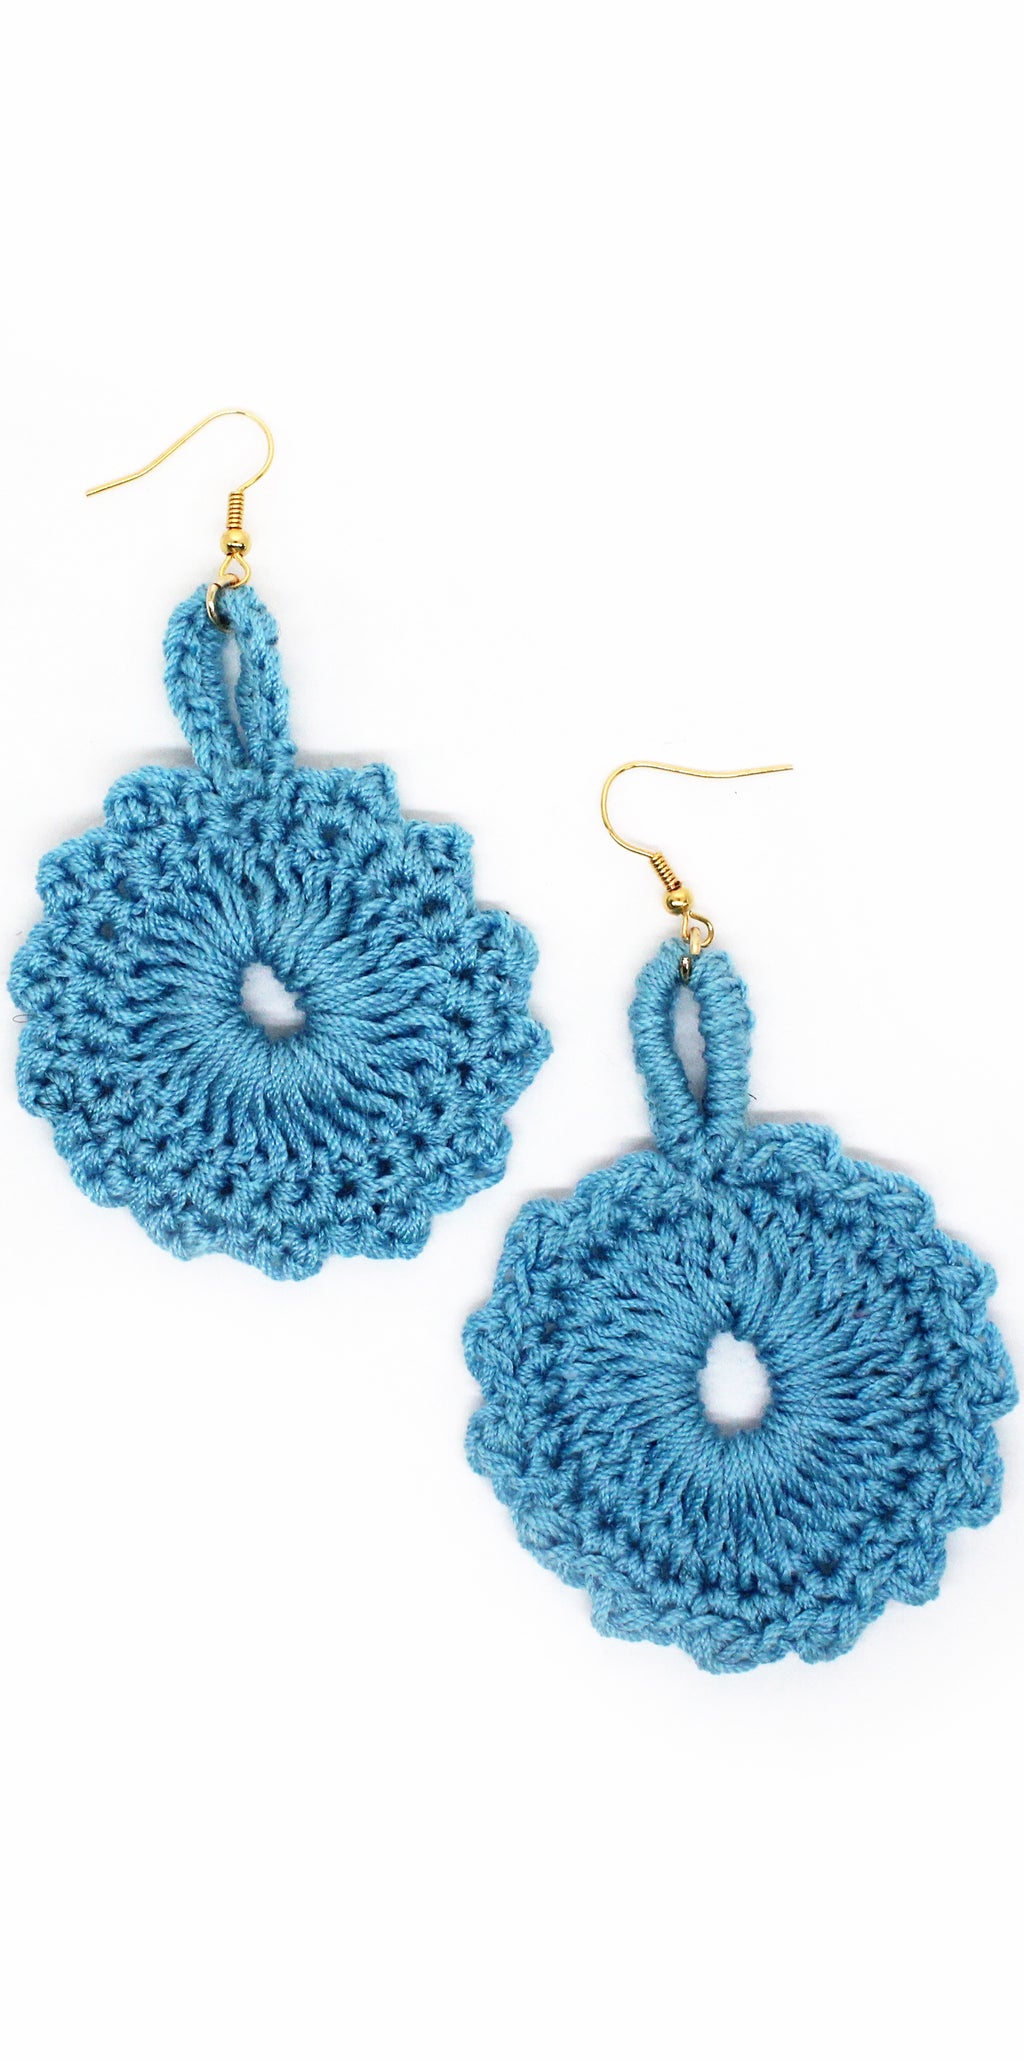 Melodious Crochet Blue Earrings